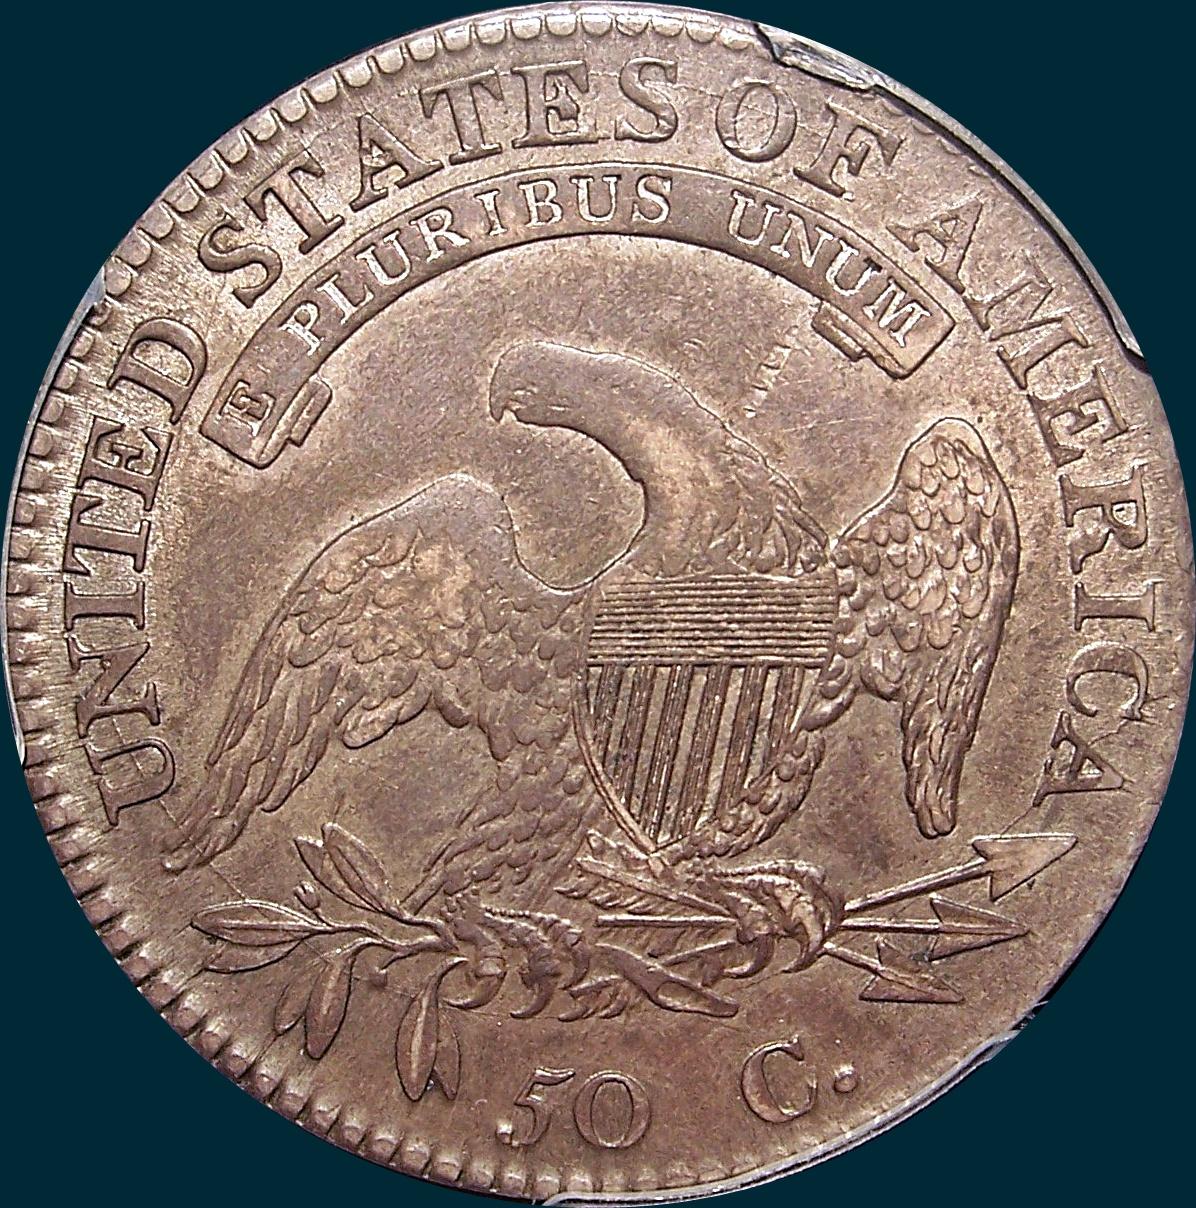 1814, E over A, O-108, capped bust half dollar